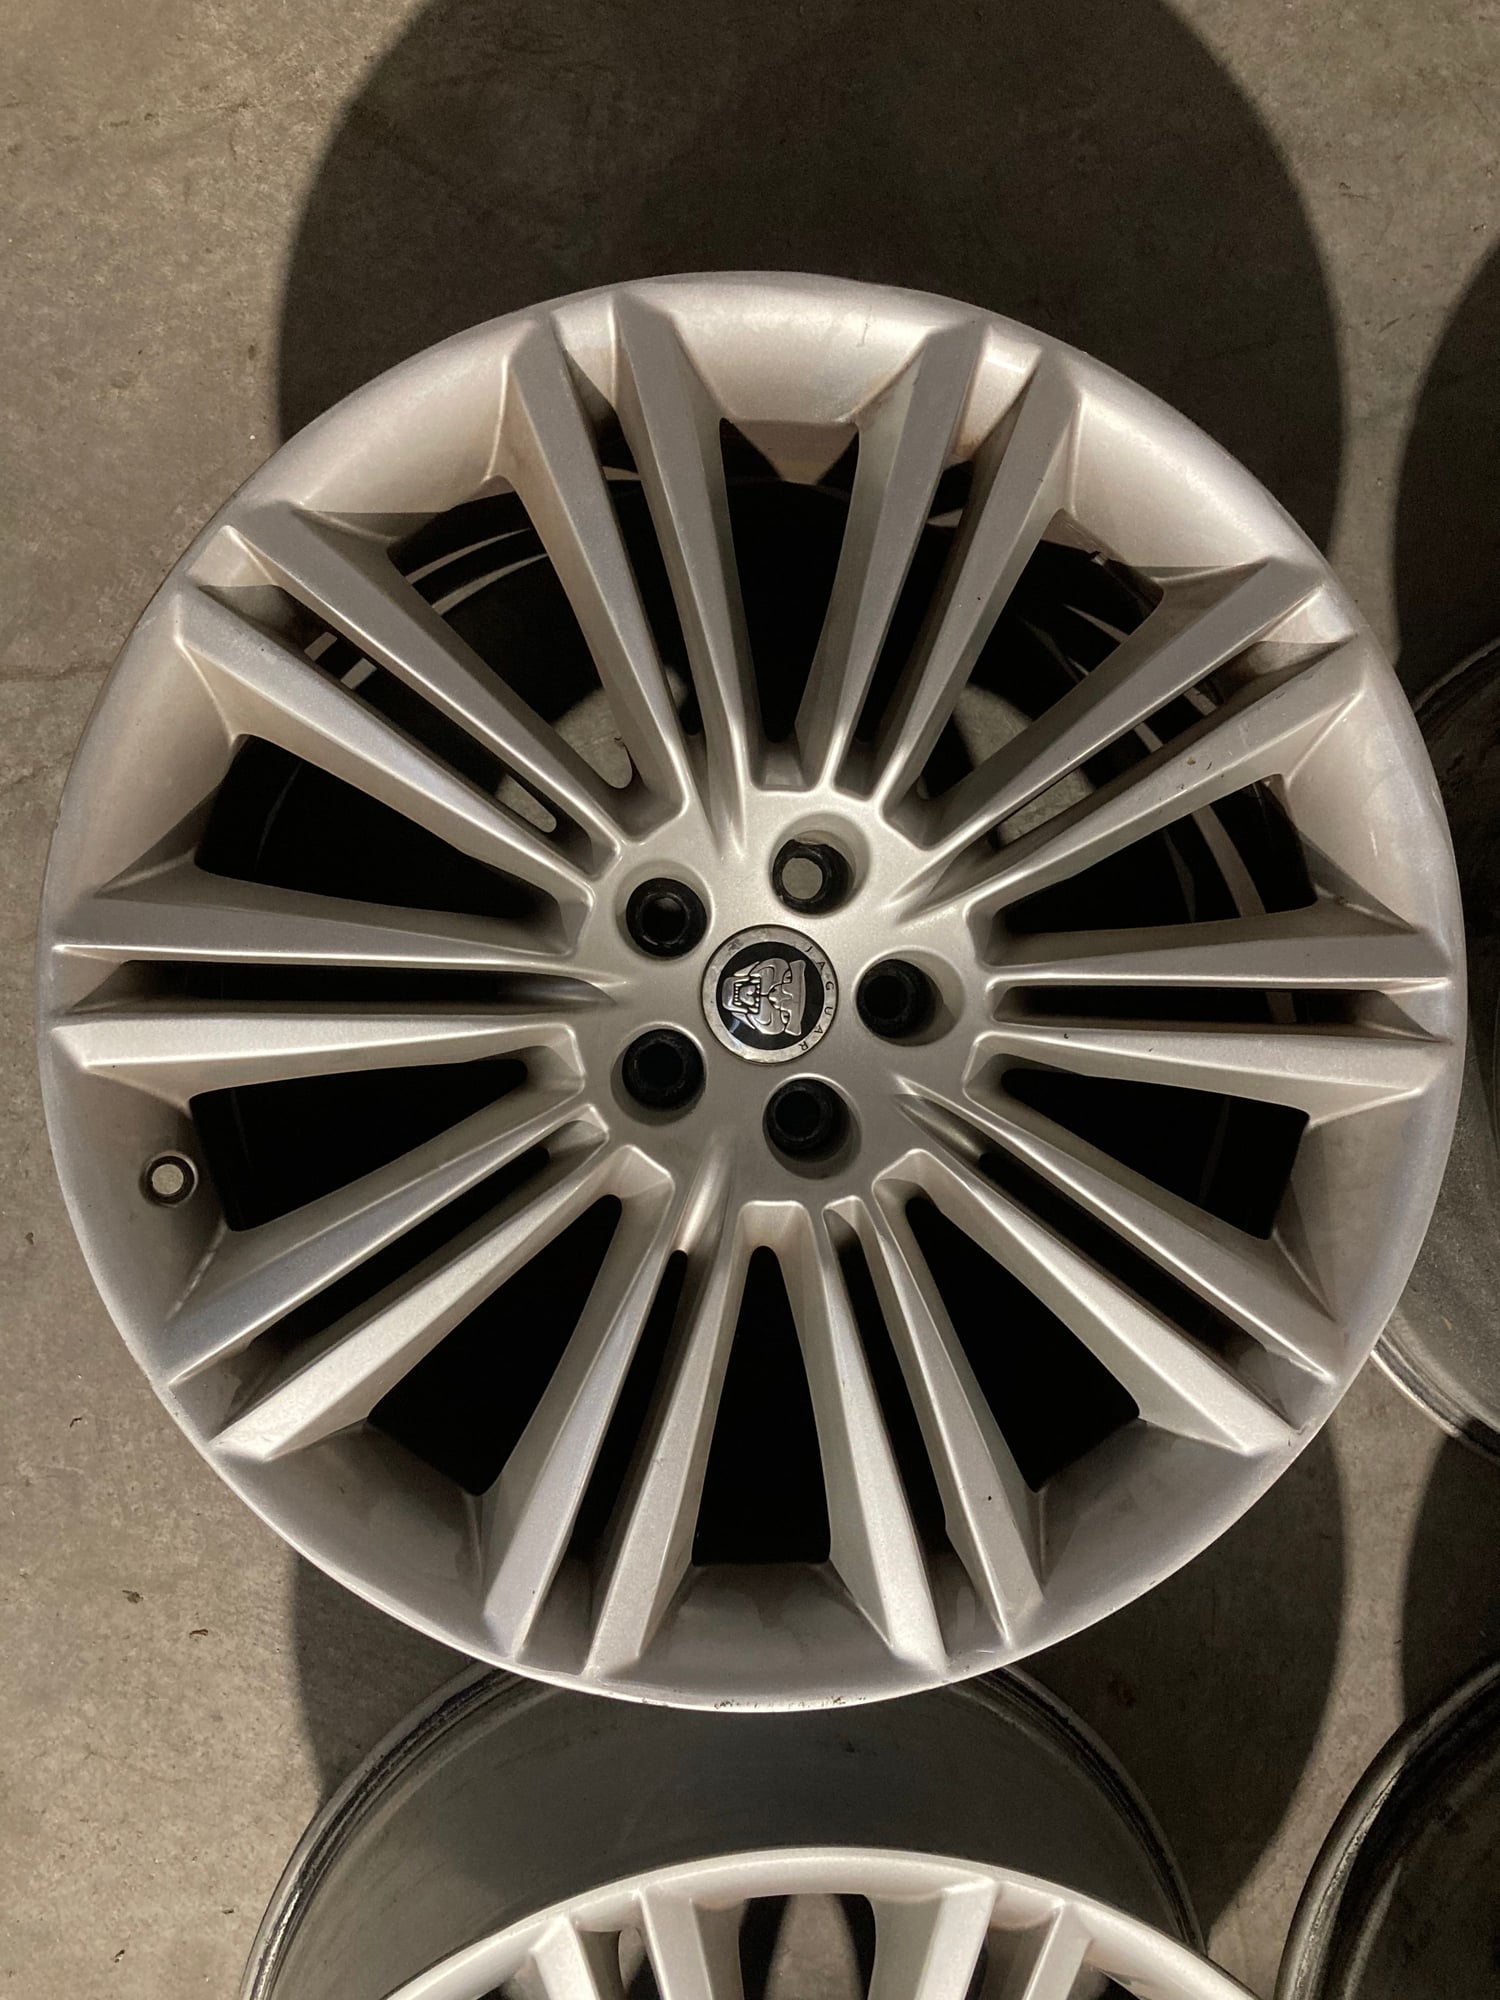 Wheels and Tires/Axles - Jaguar 20” Kasuga Wheels - Used - 2010 to 2019 Jaguar XJ - Austin, TX 78719, United States